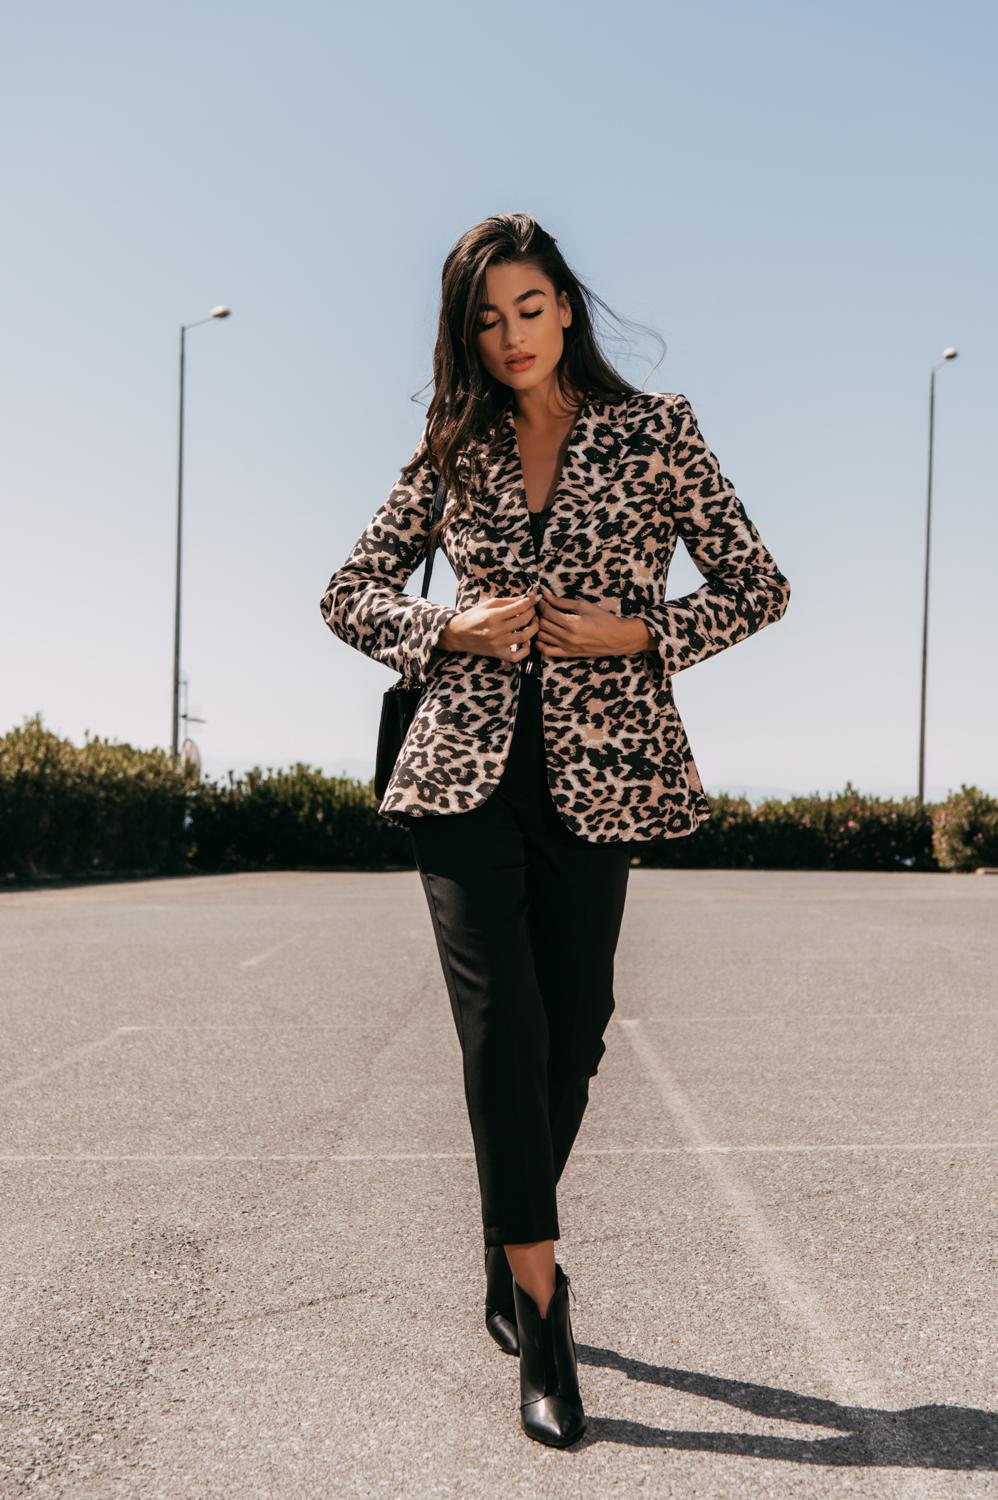 Narrow Waiste Blazer with Leopard Print | FreeStyle Fashion | Women Clothing